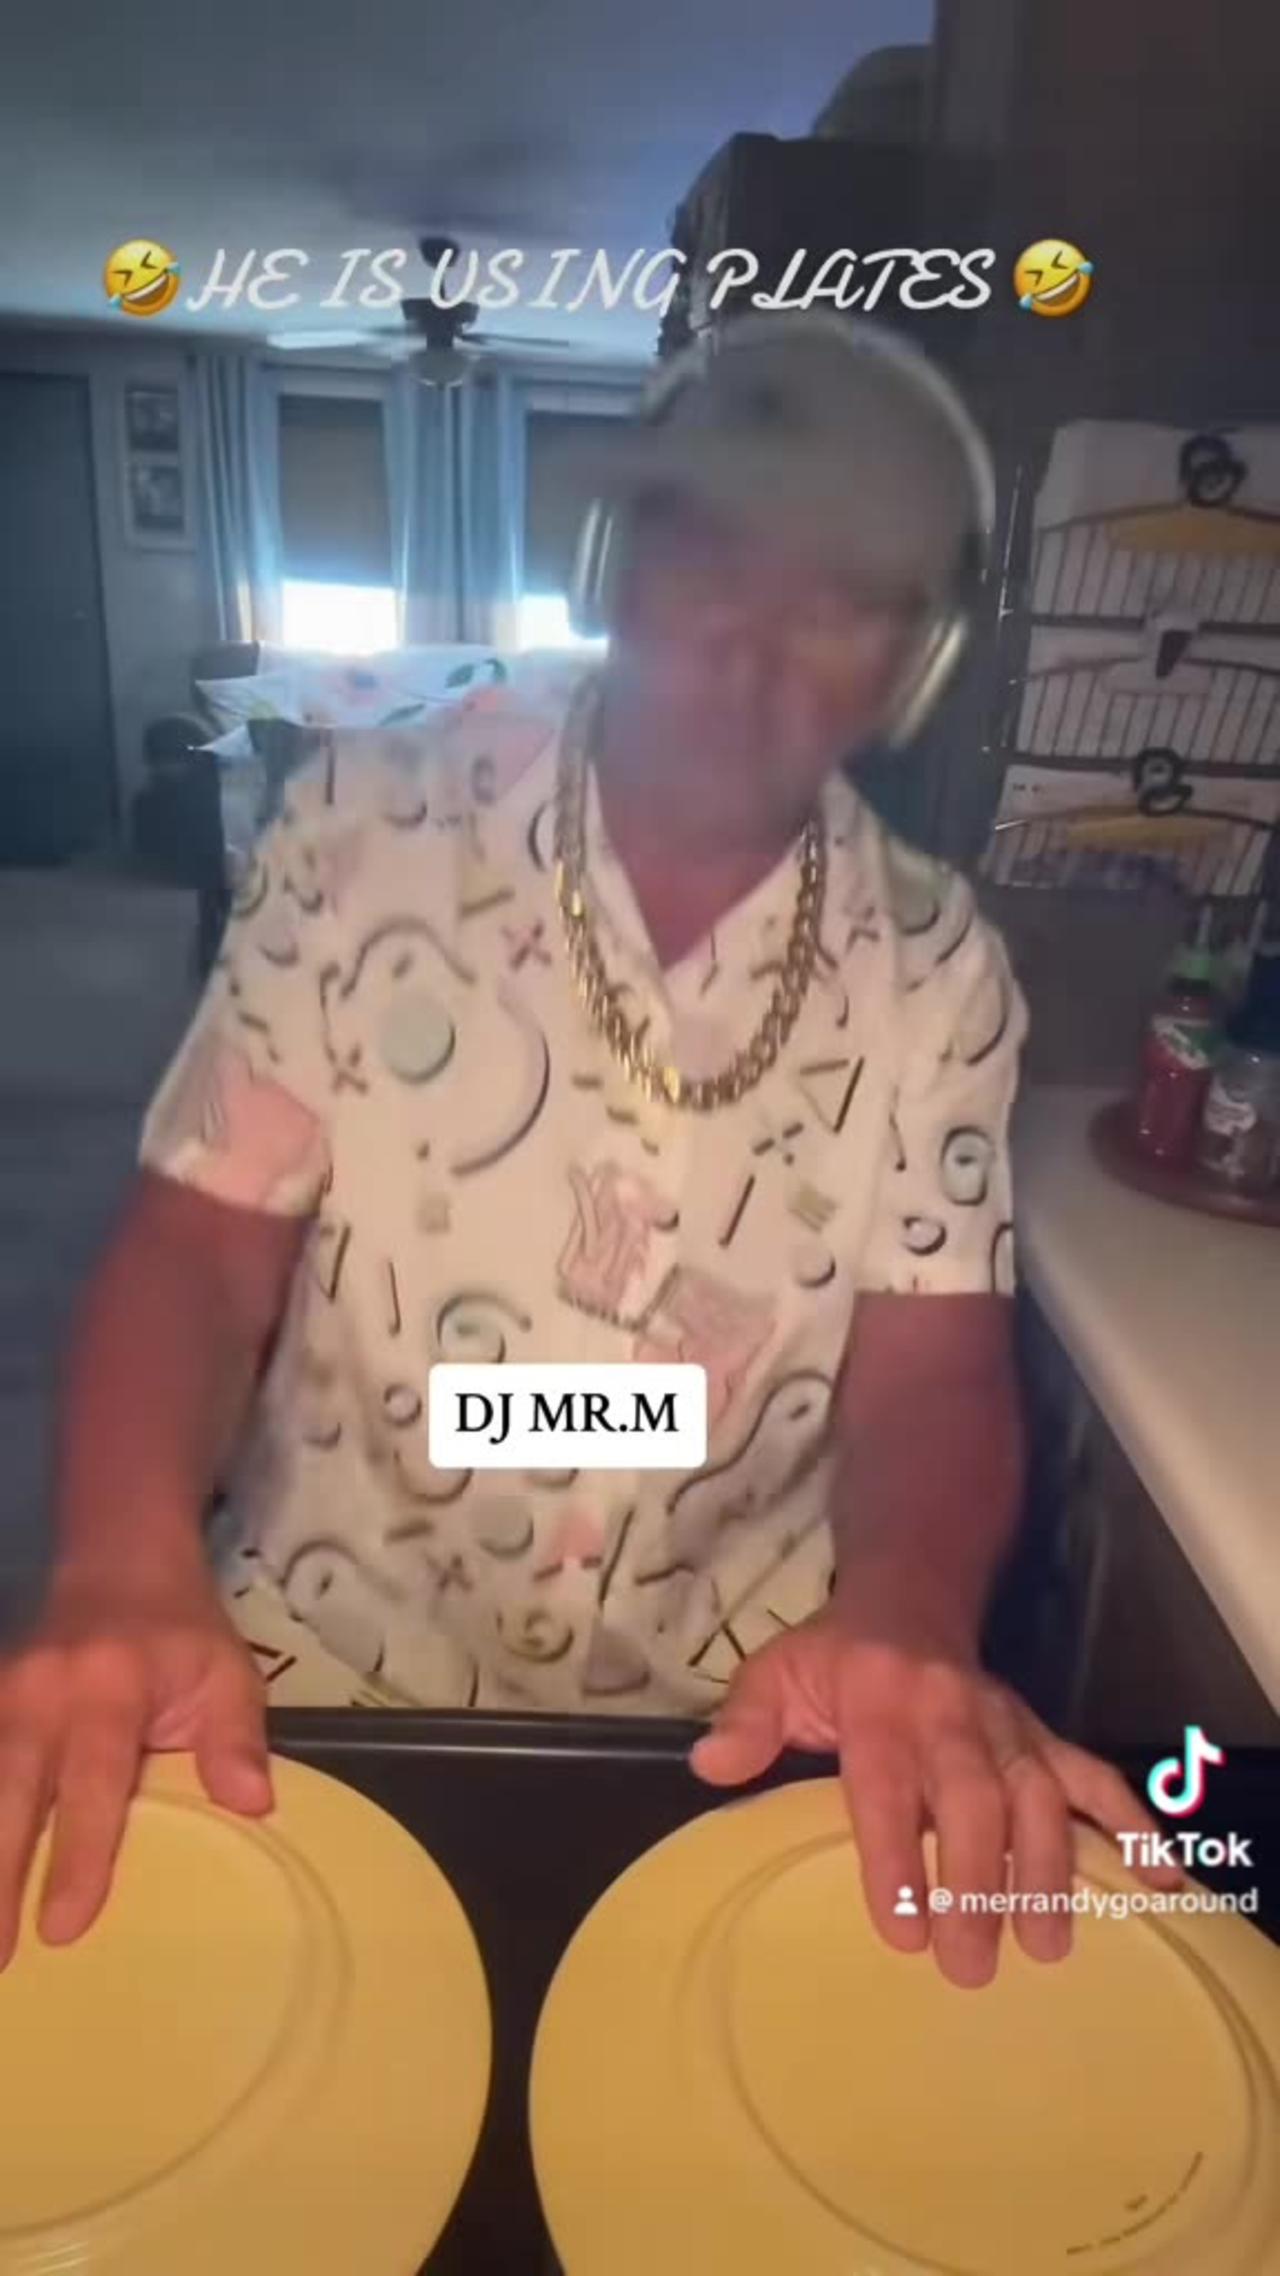 DJ MR. M WITH PLATES 🤣